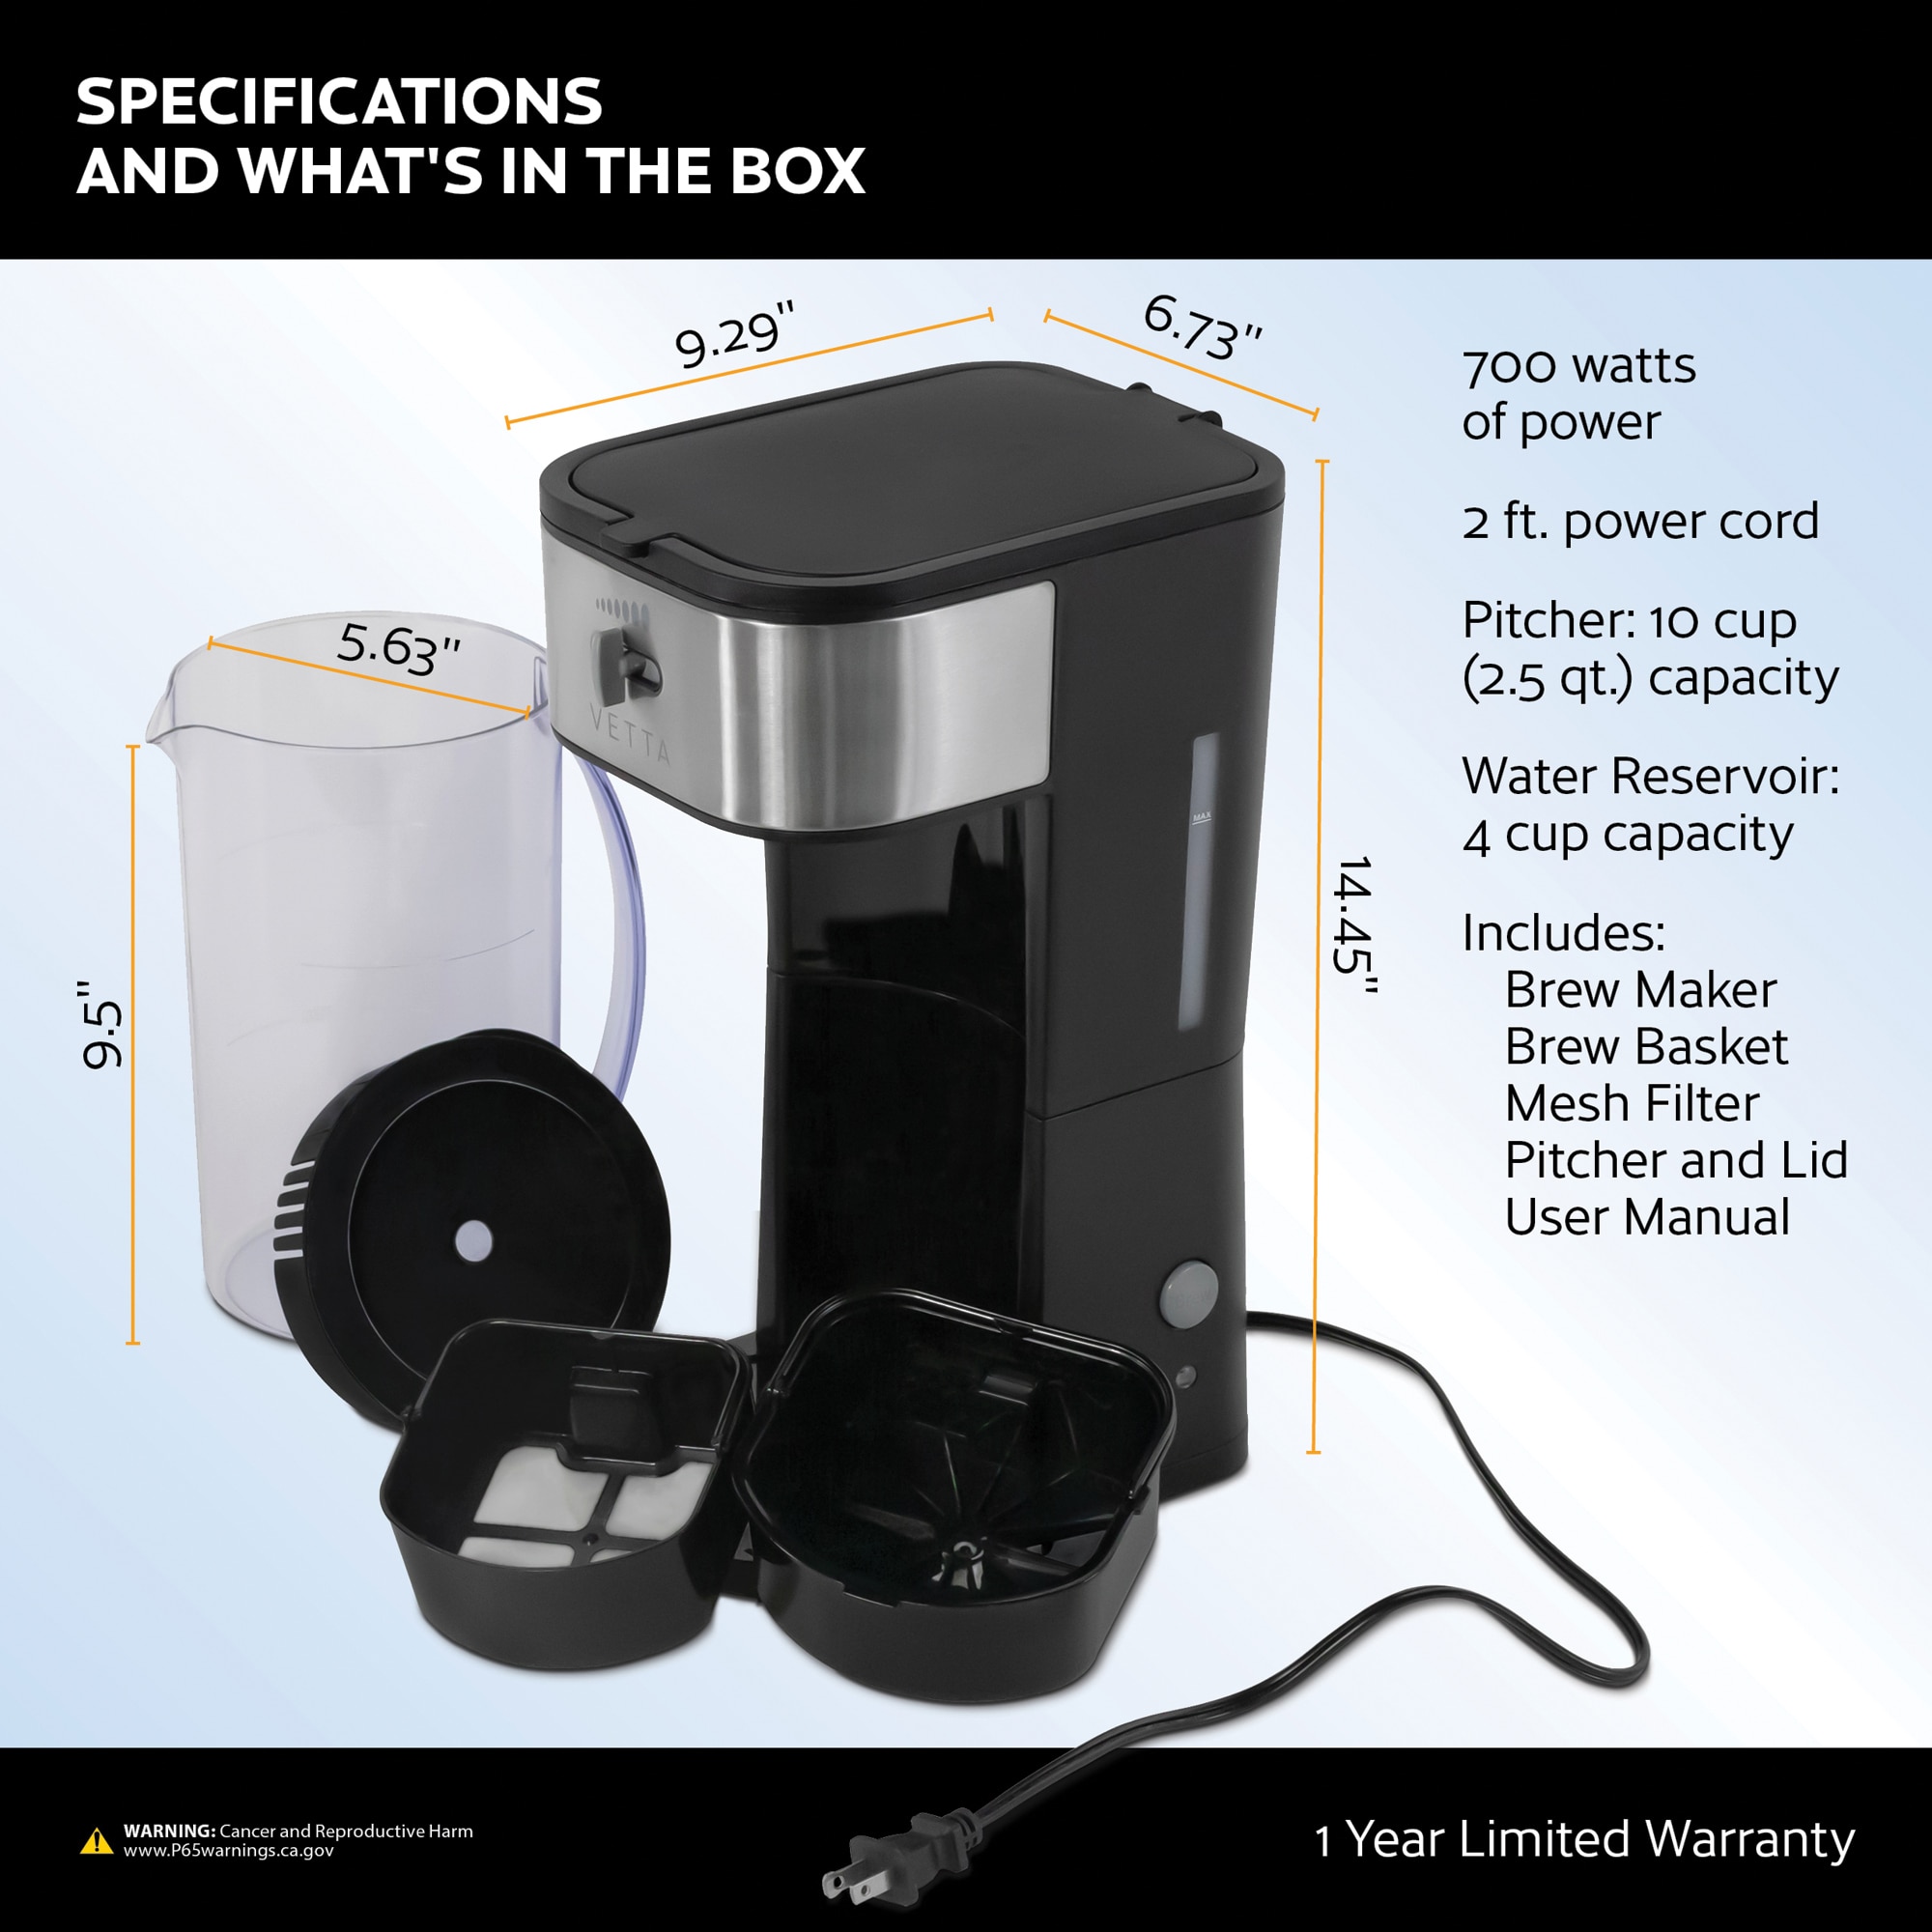 4L Instant Heating Hot Water Boiler Dispenser Coffee Tea Maker Urn